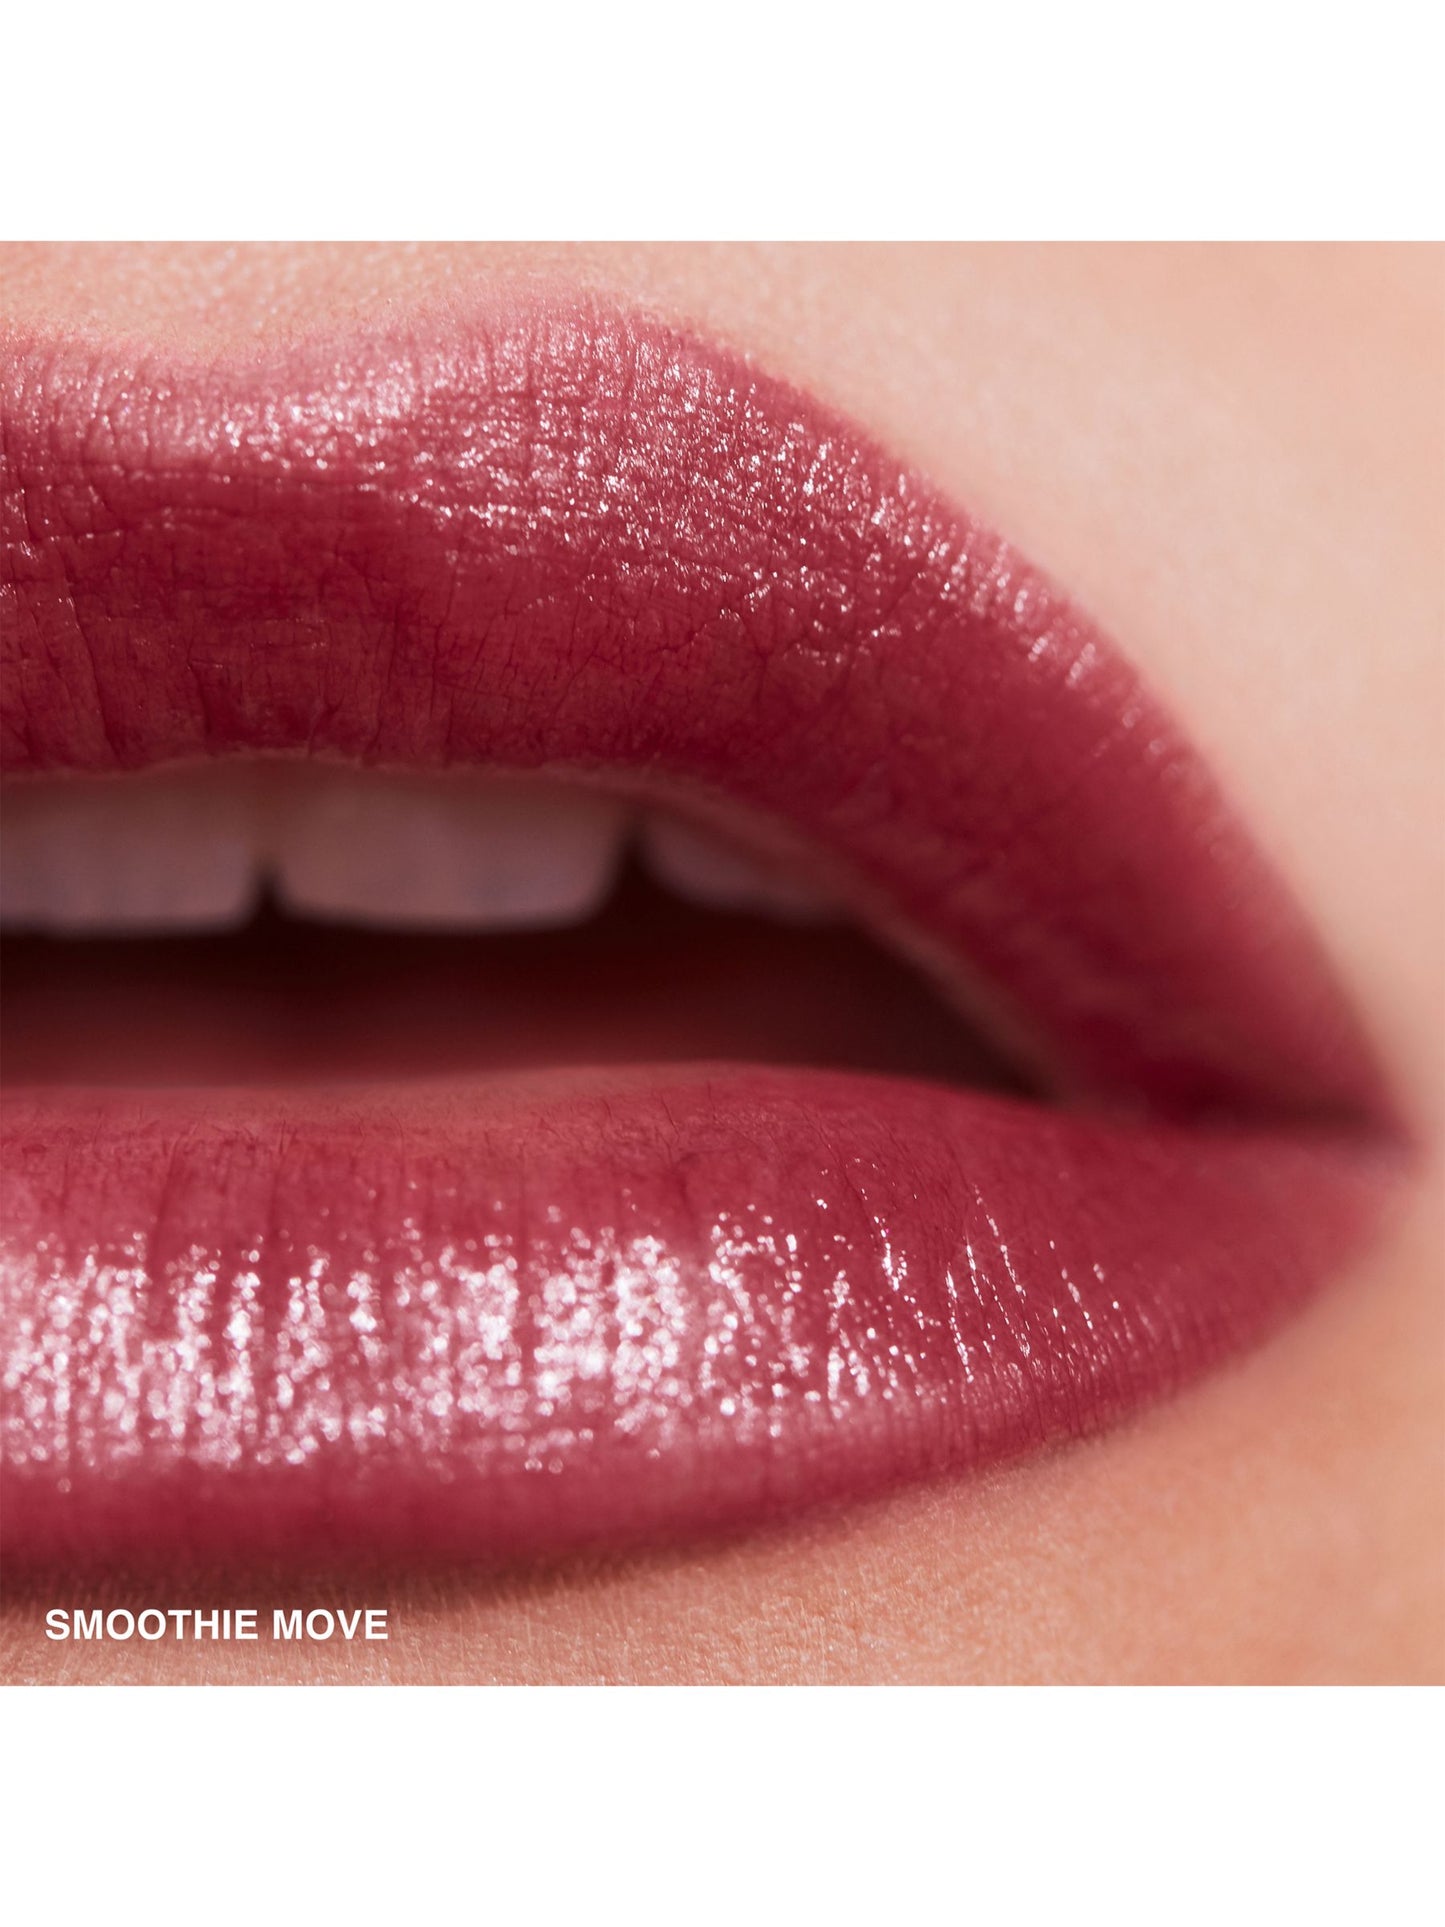 Bobbi Brown Crushed Liquid Lip Colour in Smoothie Move Mini